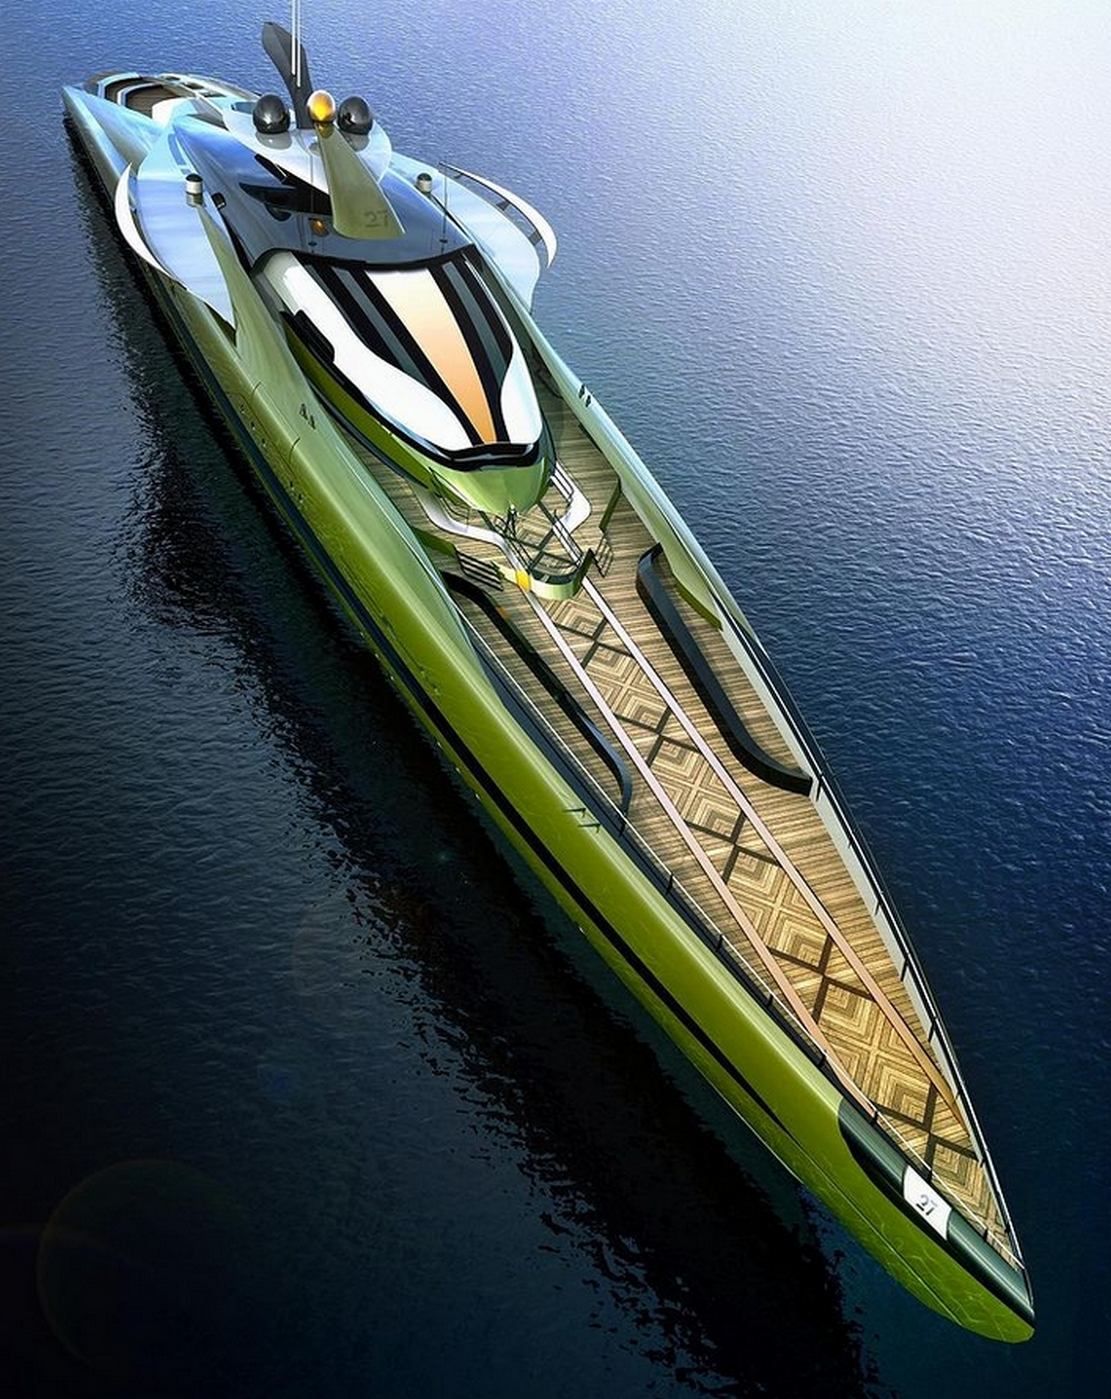 This 433-Foot Megayacht Concept Has a Sea-Salt Pool That